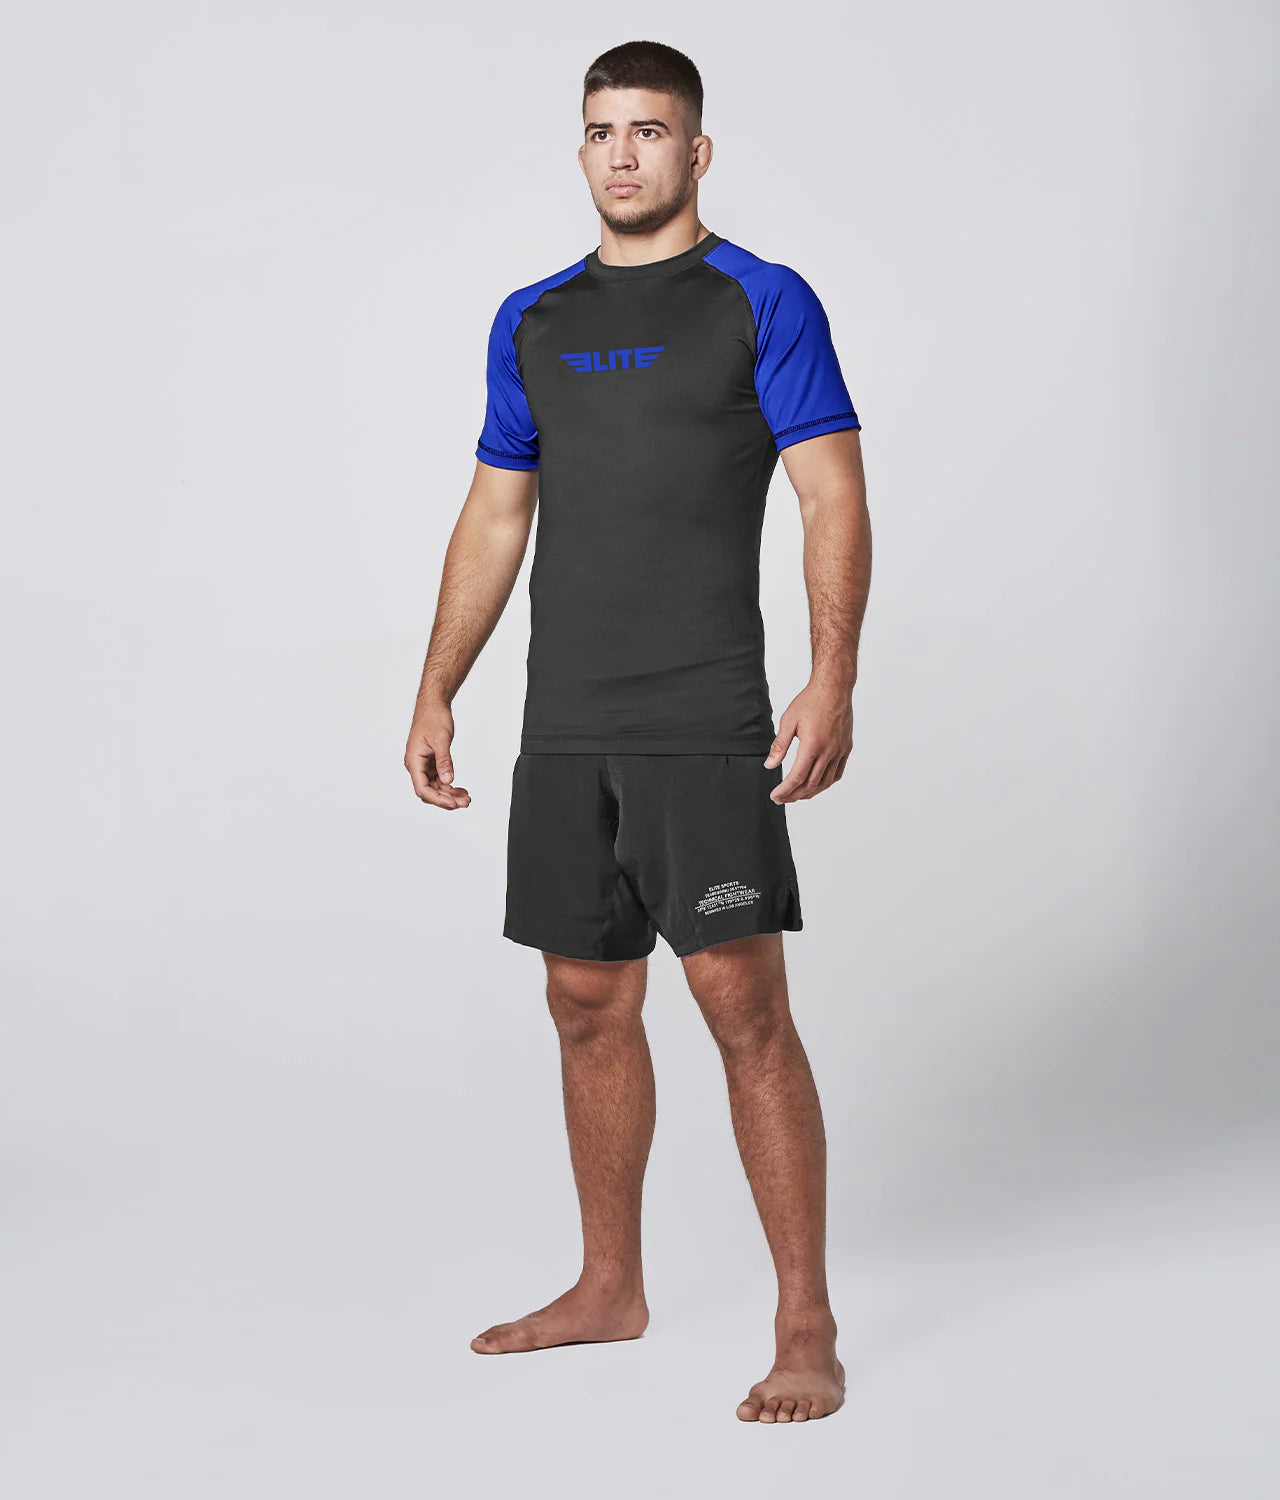 Elite Sports Men's Standard Blue Short Sleeve Training Rash Guard Side View